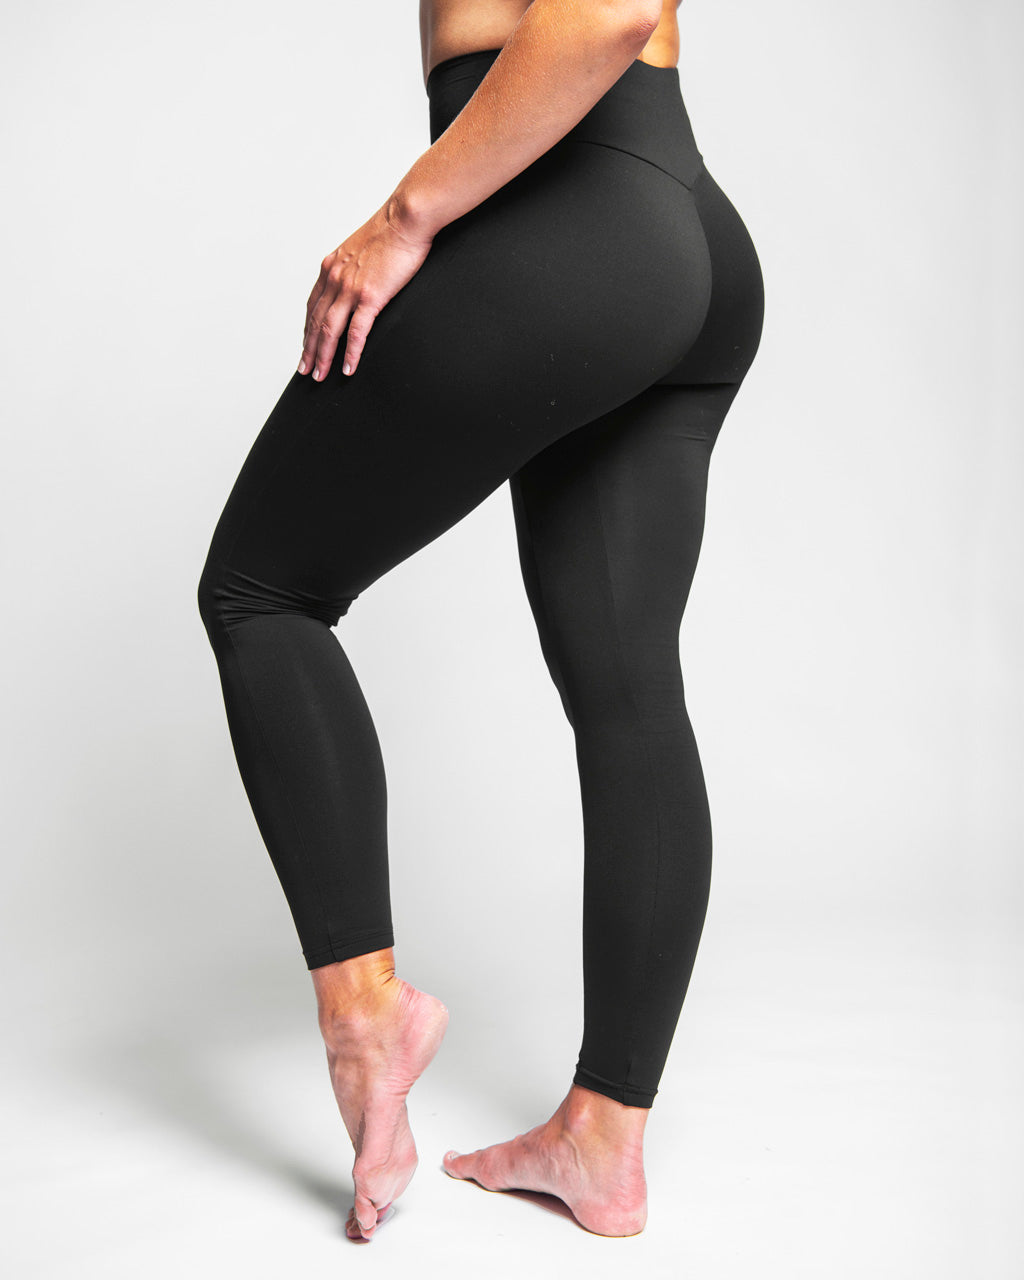 Shop Online Nepra Yoga Pants for Women in Europe – NÉPRA